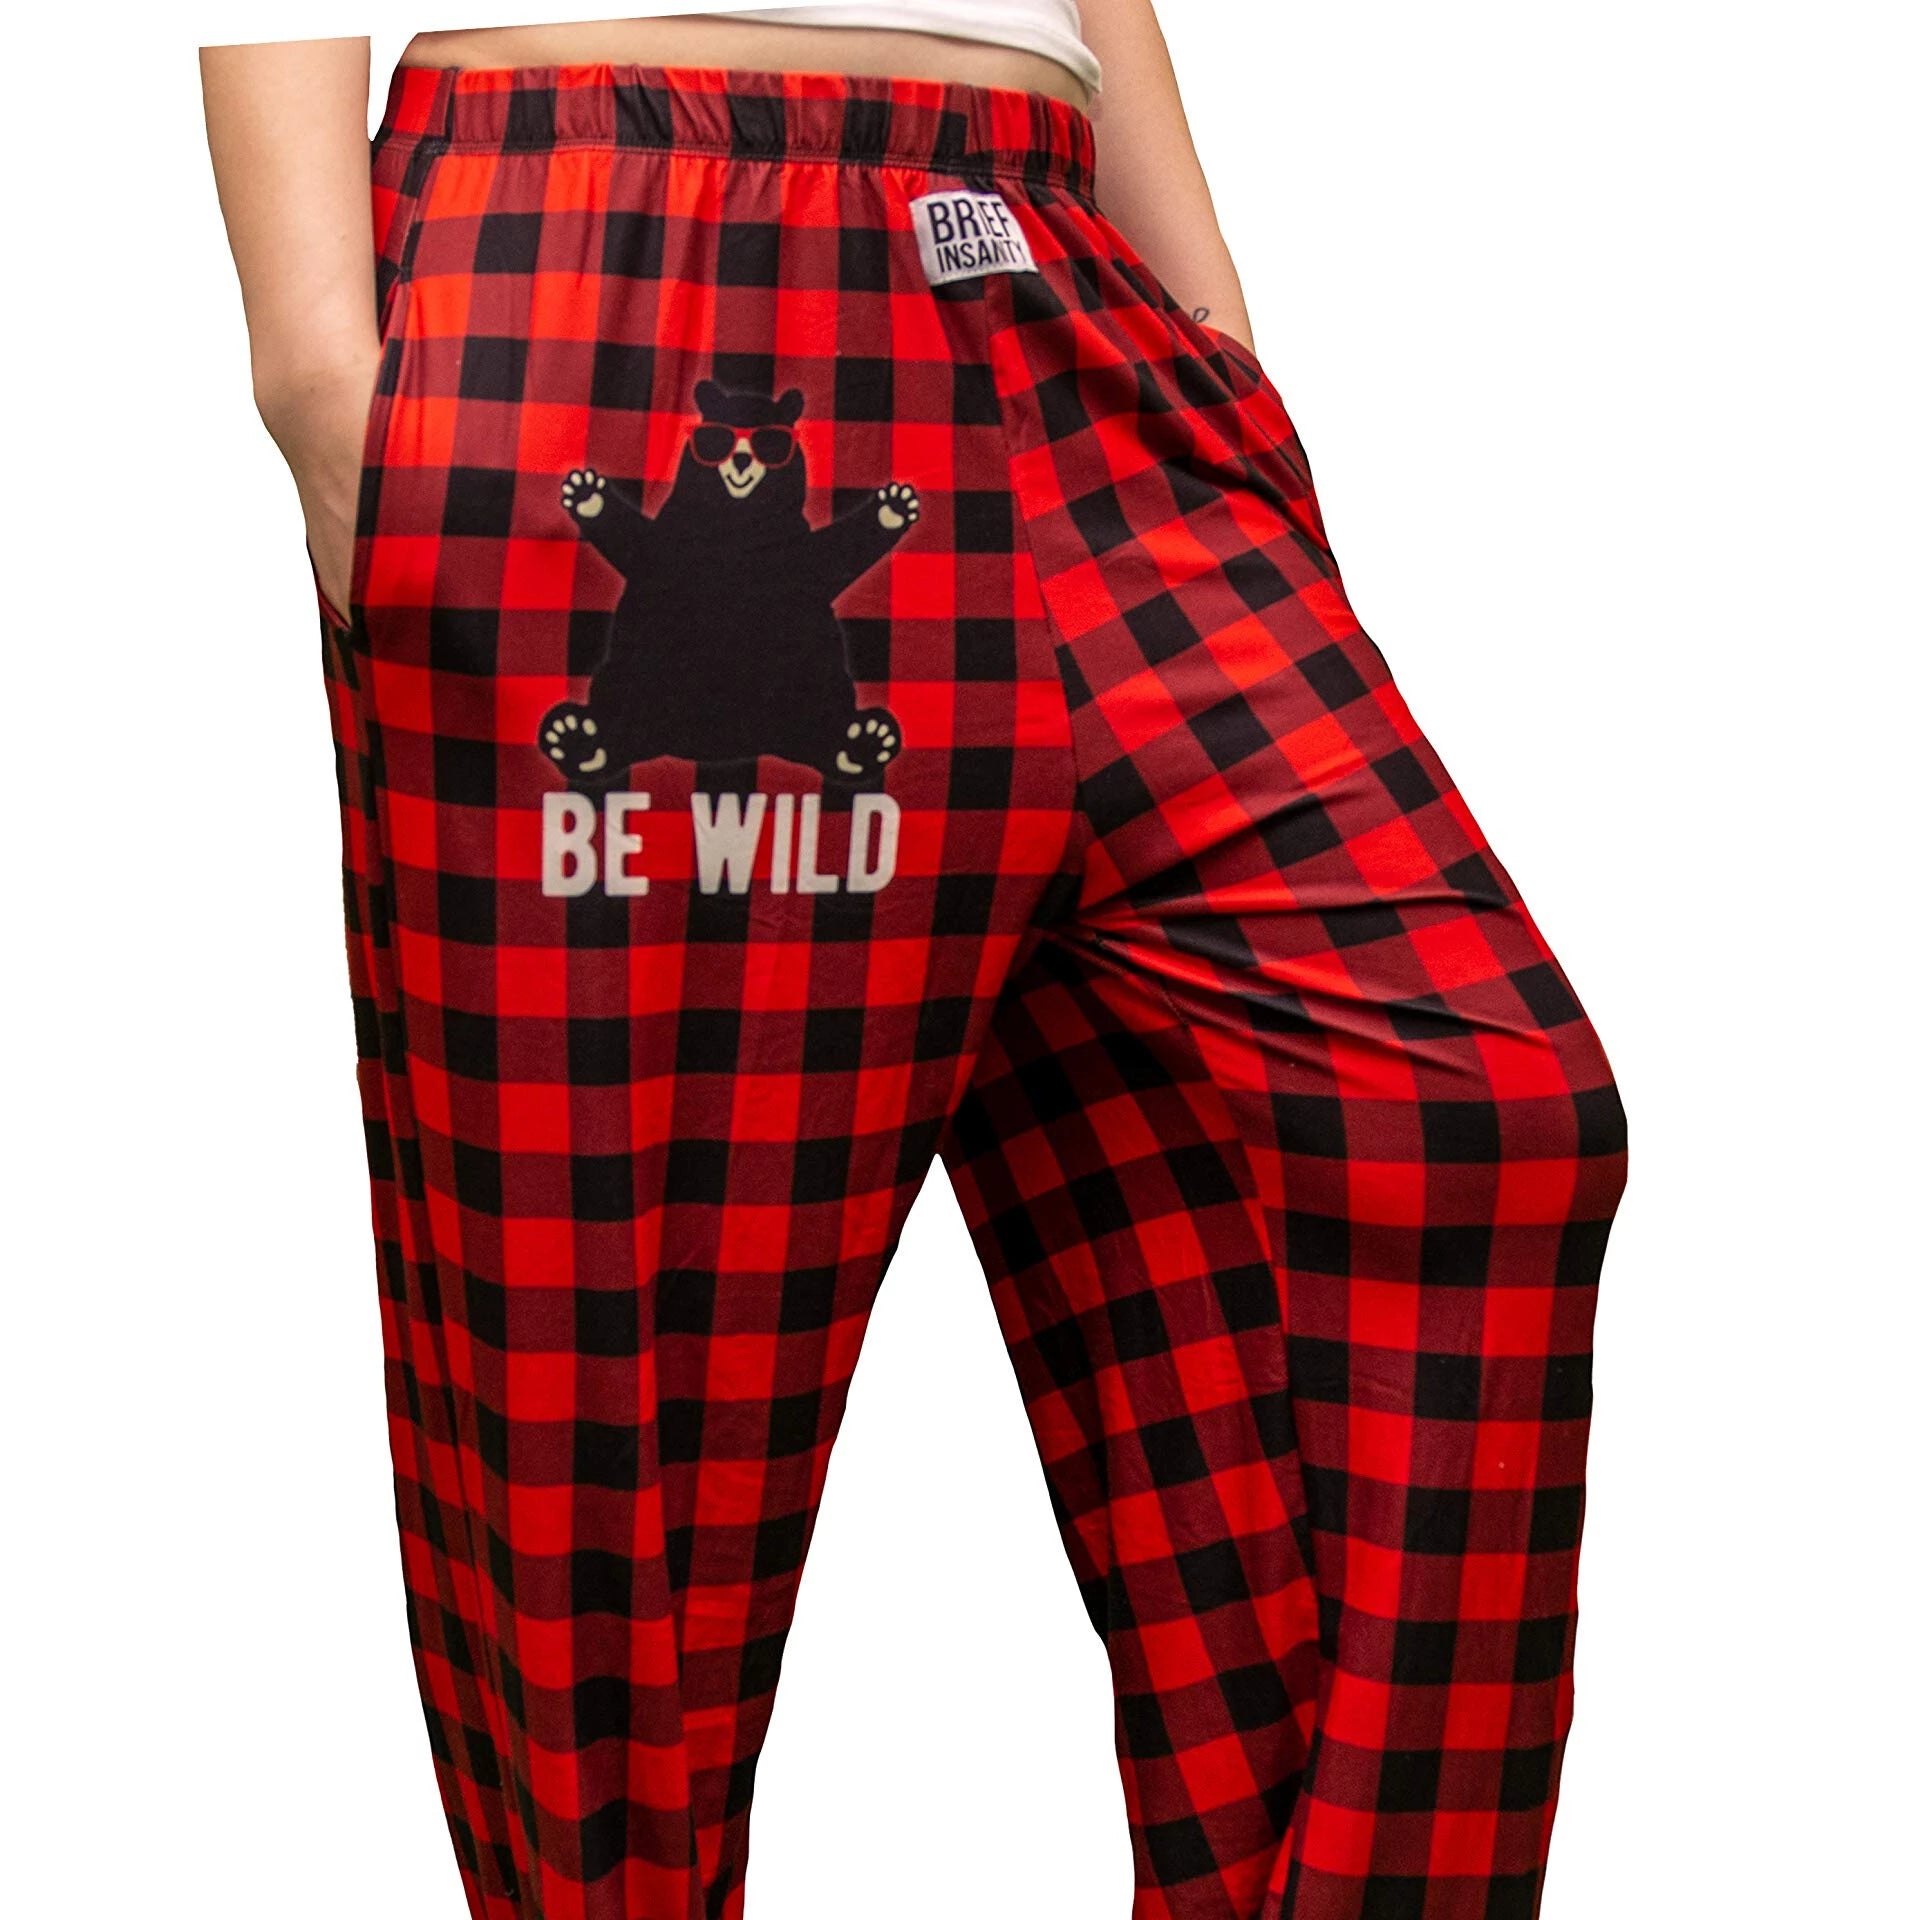 Be Wild Bear Pajama Lounge Pants front/side angle view